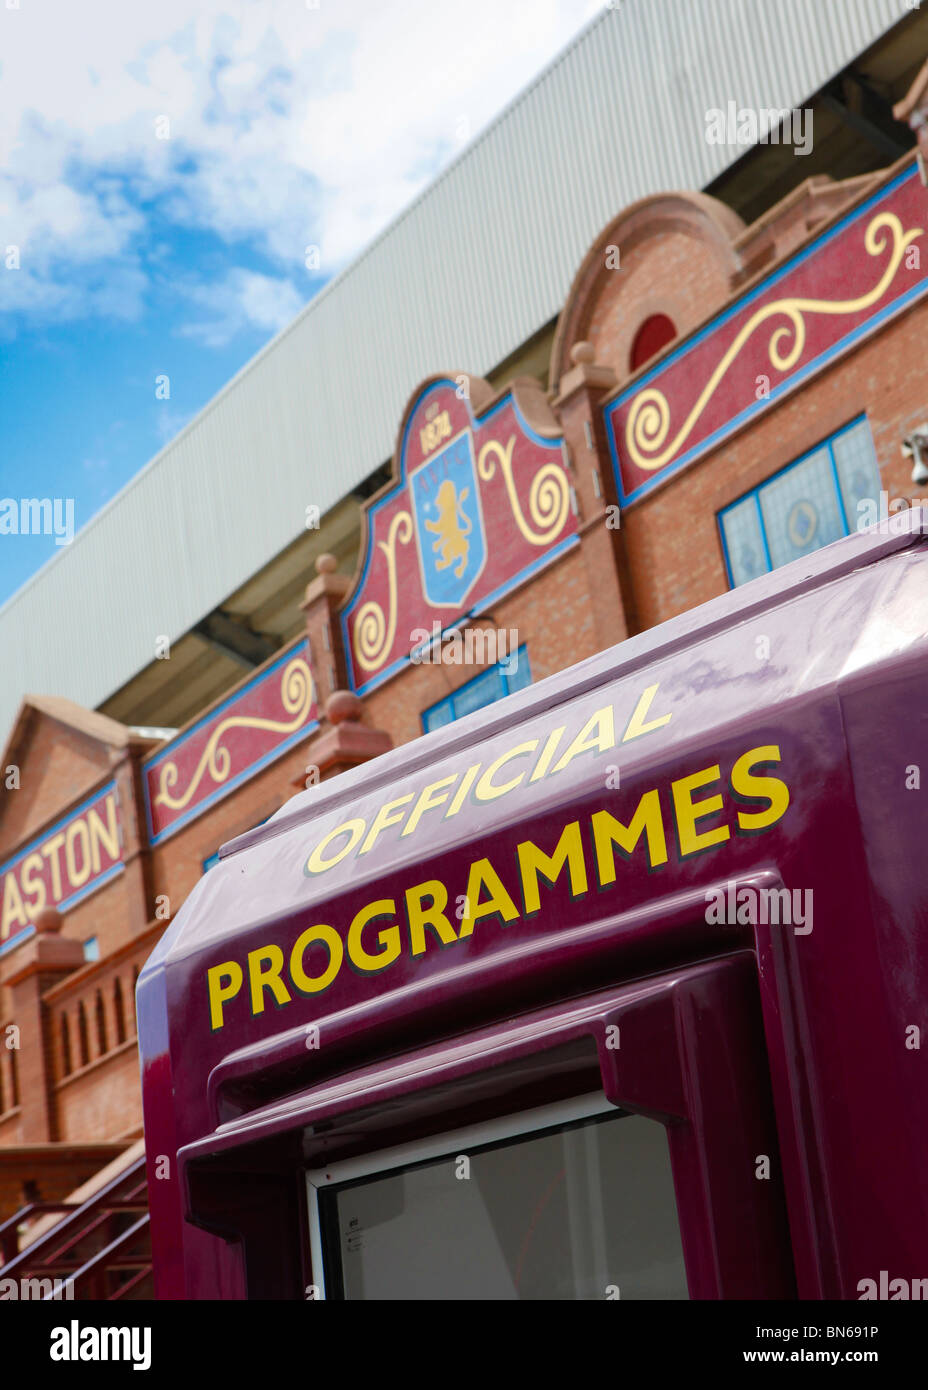 Aston Villa Football Club, Birmingham Stock Photo